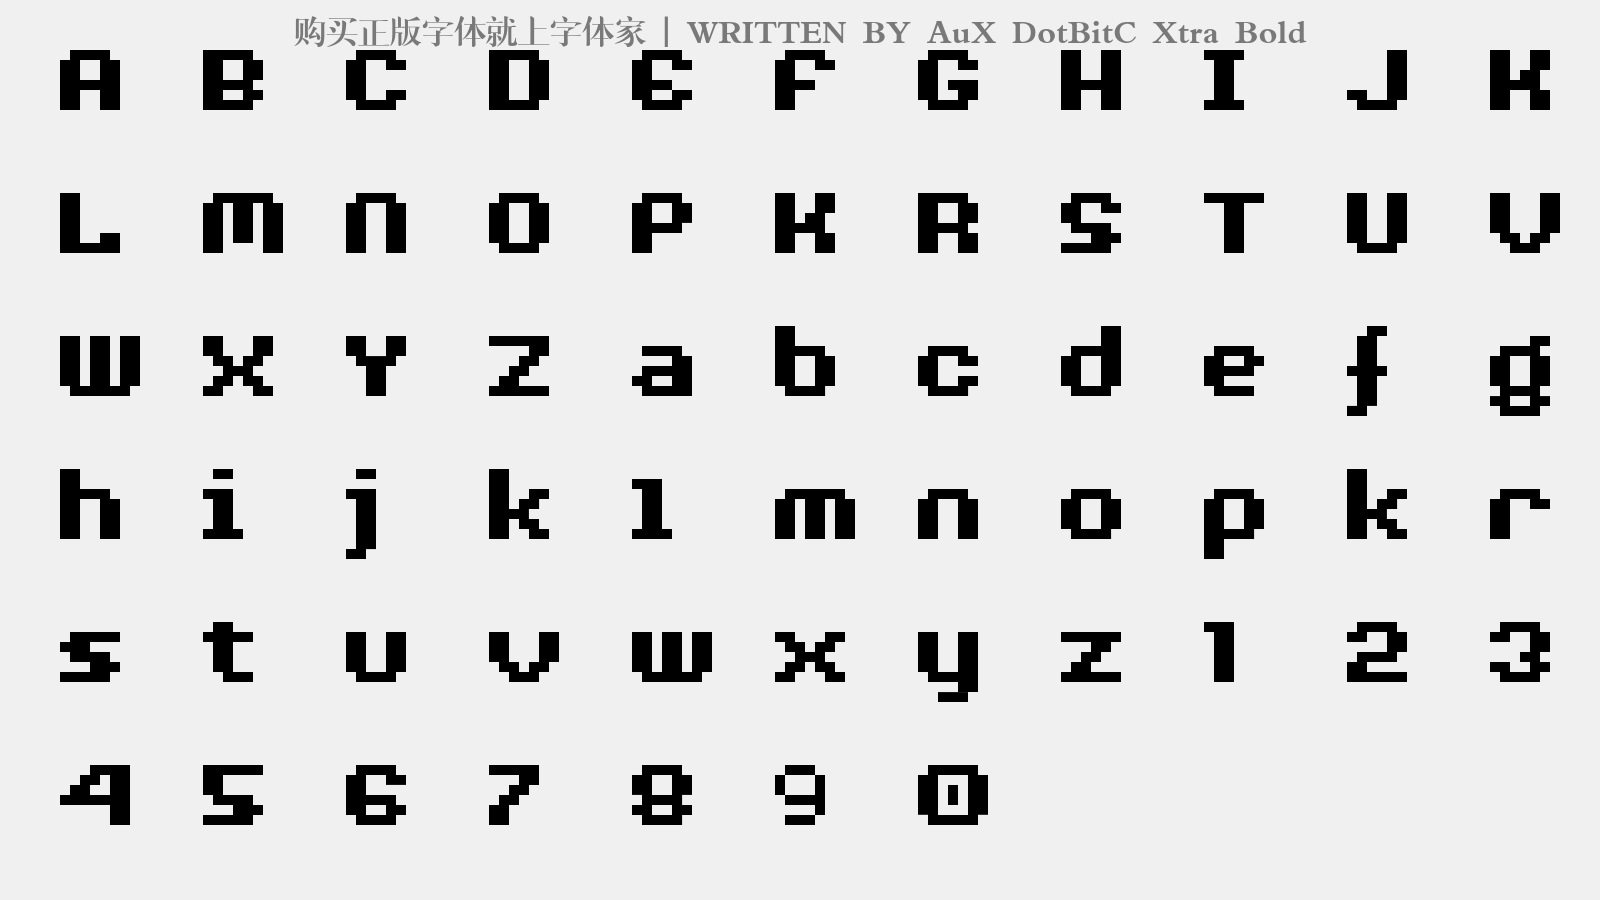 AuX DotBitC Xtra Bold - 大写字母/小写字母/数字